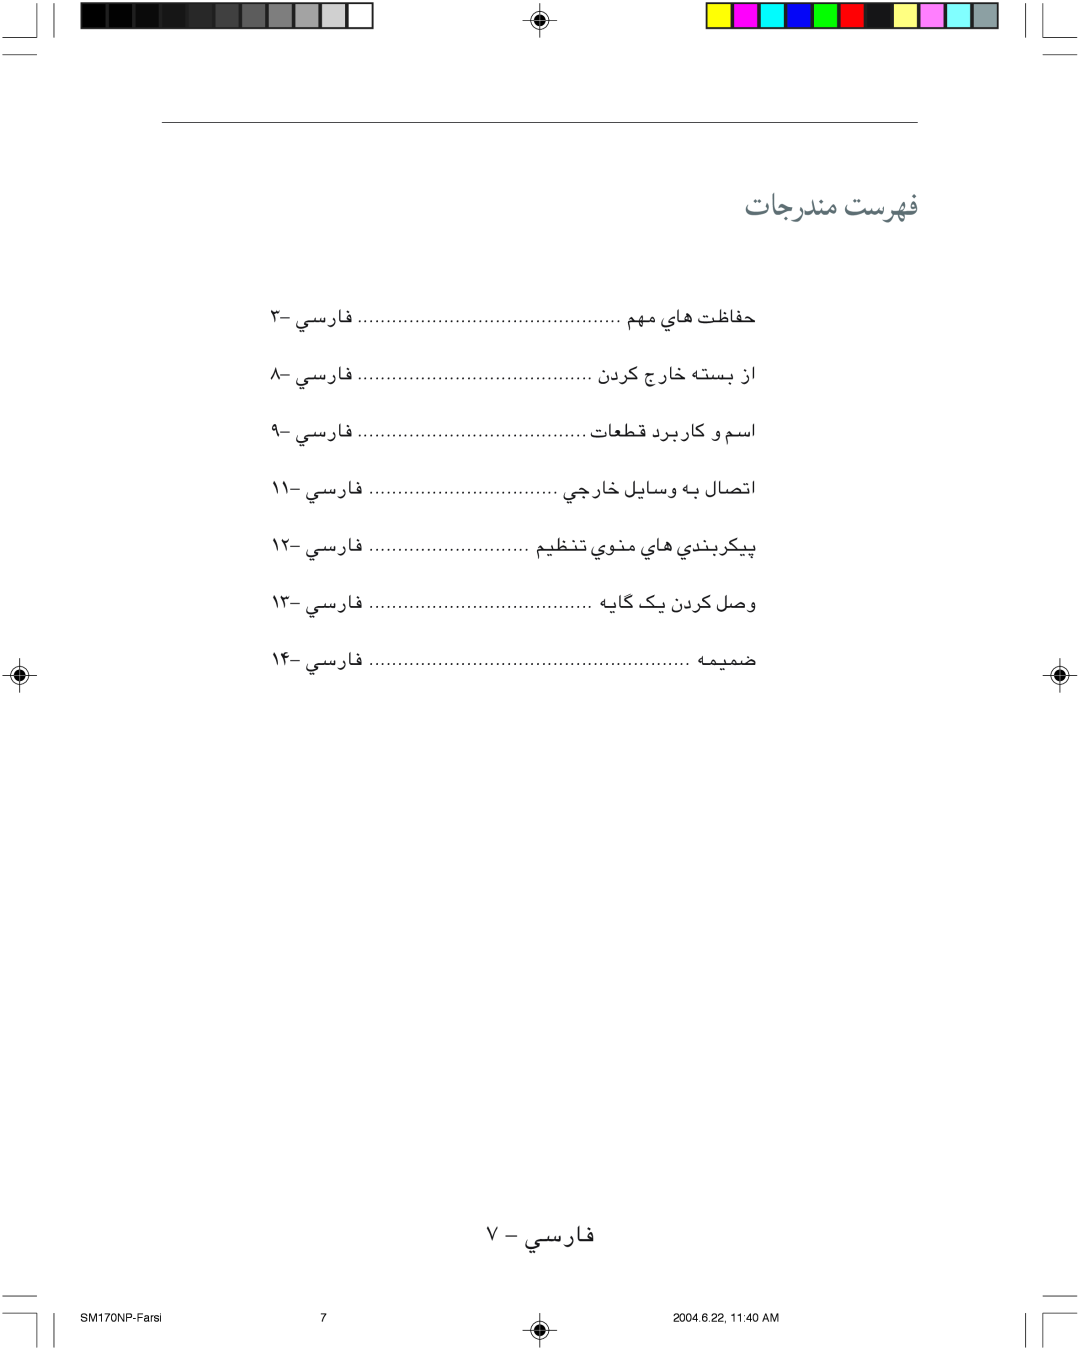 Samsung SMT-170P manual تﺎﺟرﺪﻨﻣ ﺖﺳﺮﻬﻓ, ۷ - ﻲﺳرﺎﻓ, ۱۴- ﻲﺳرﺎﻓ, SM170NP-Farsi, 2004.6.22, 1140 AM 